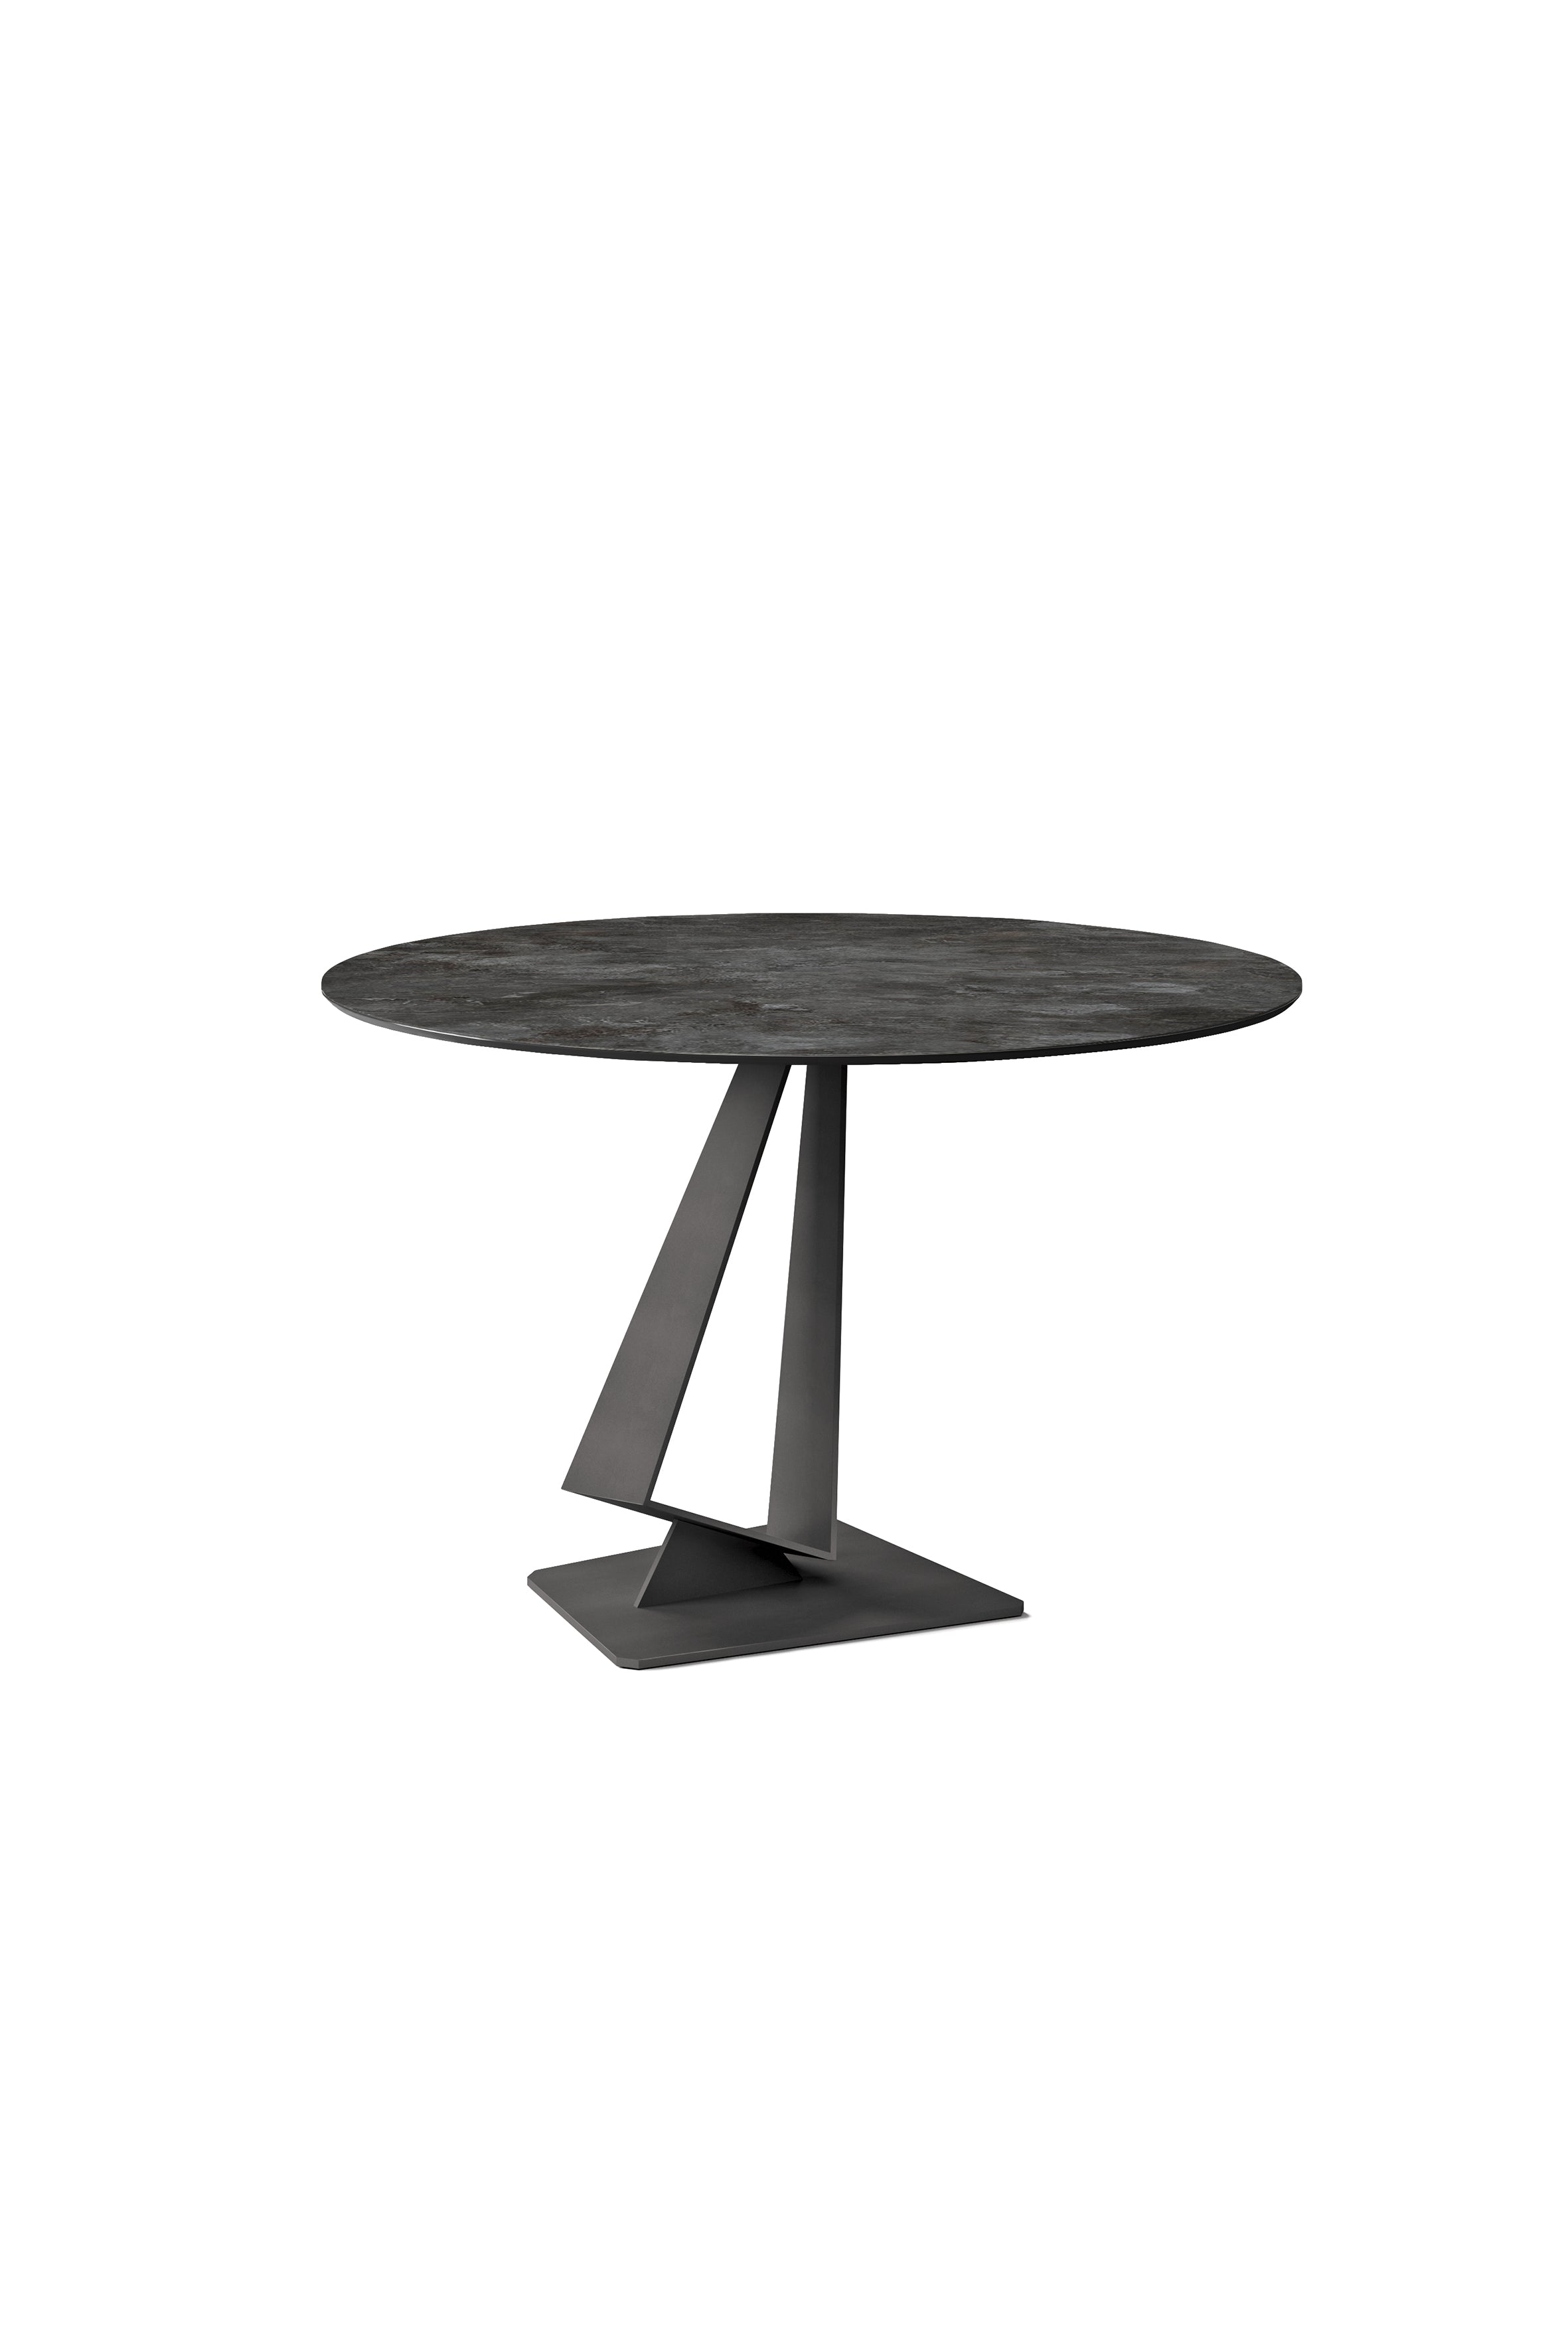 Cattelan Italia Roger Keramik Table With Steel Base